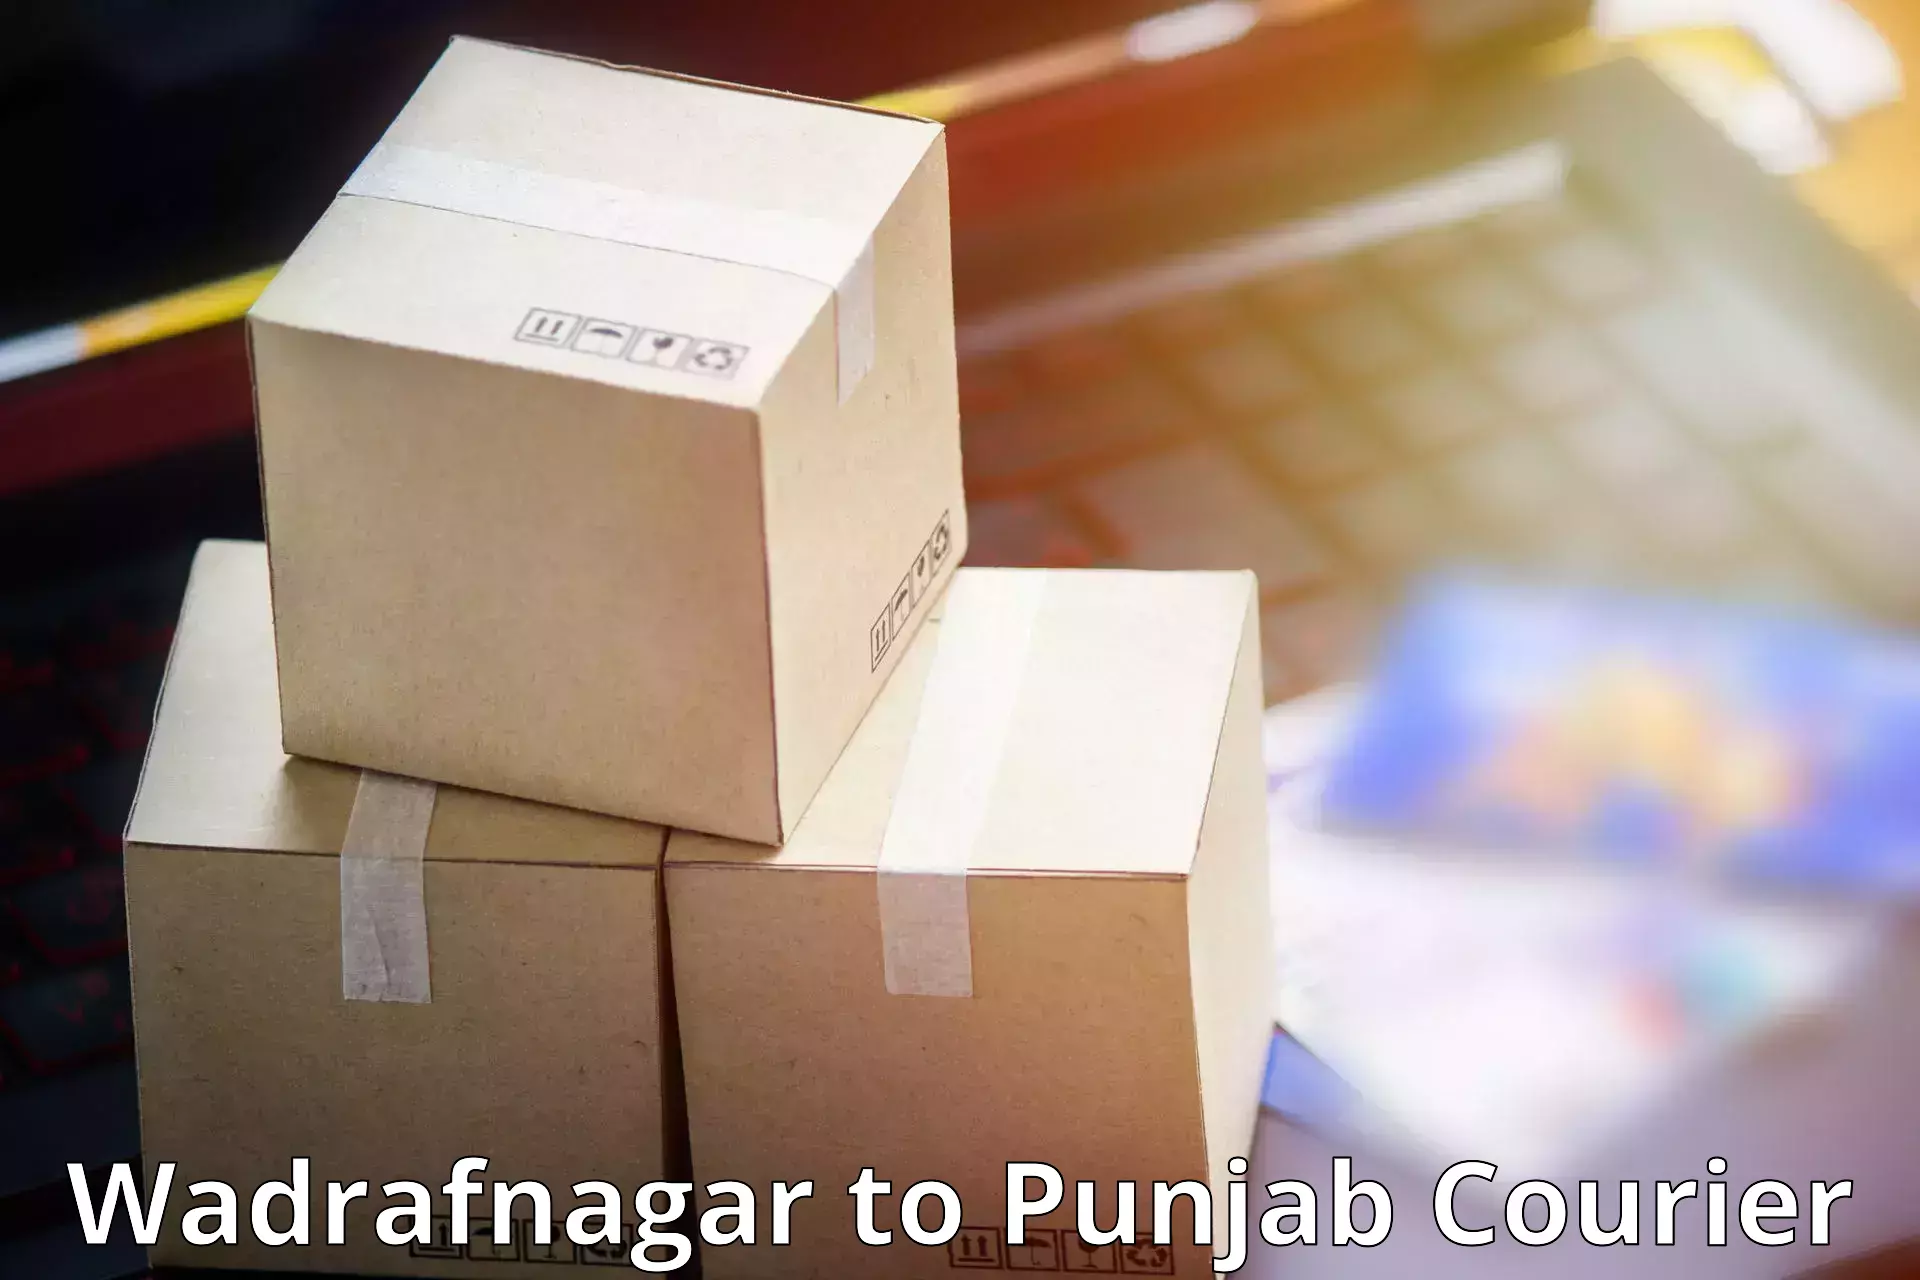 Business shipping needs Wadrafnagar to Hoshiarpur